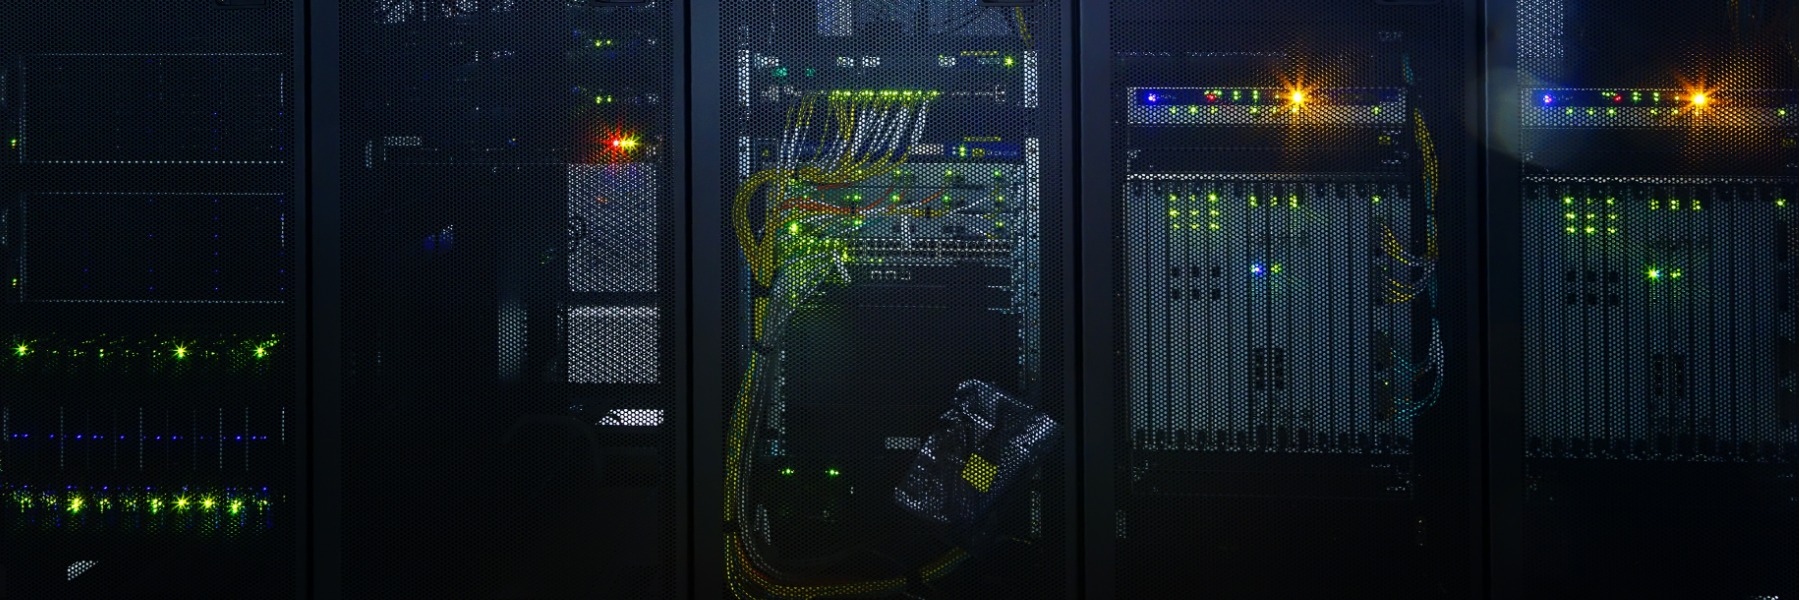 server equipment